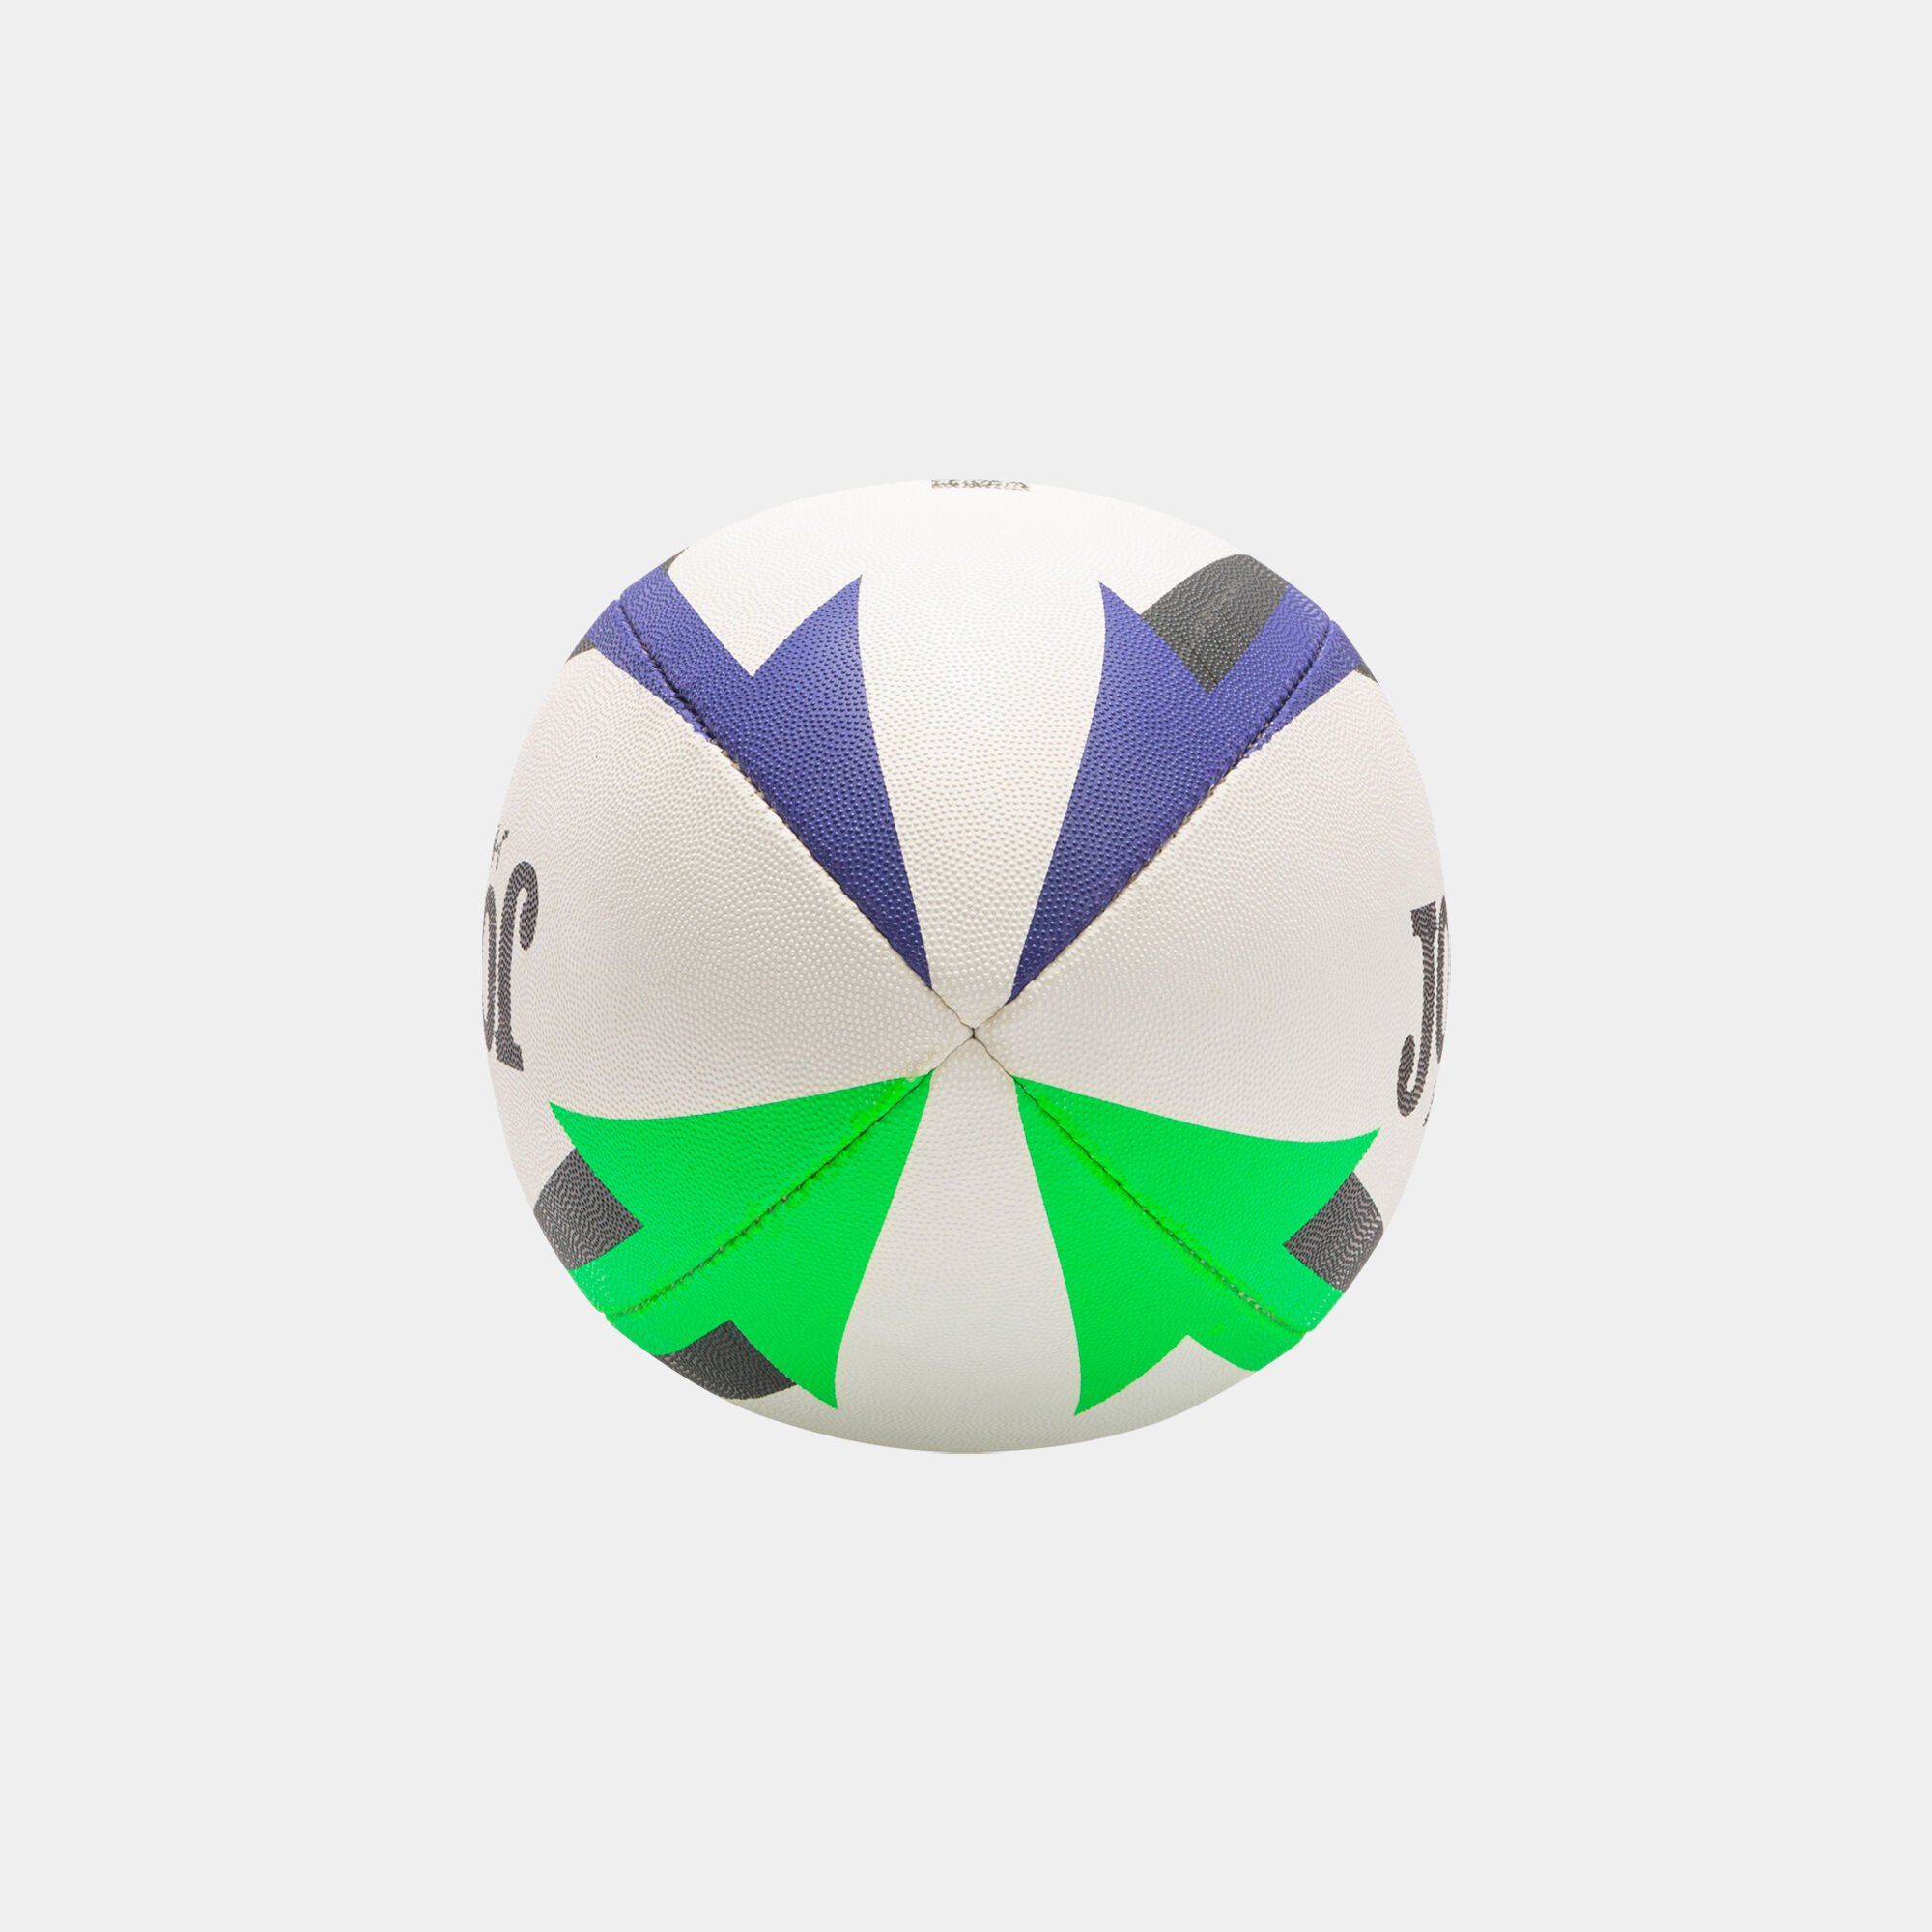 Ballon rugby J-Max blanc vert bleu roi